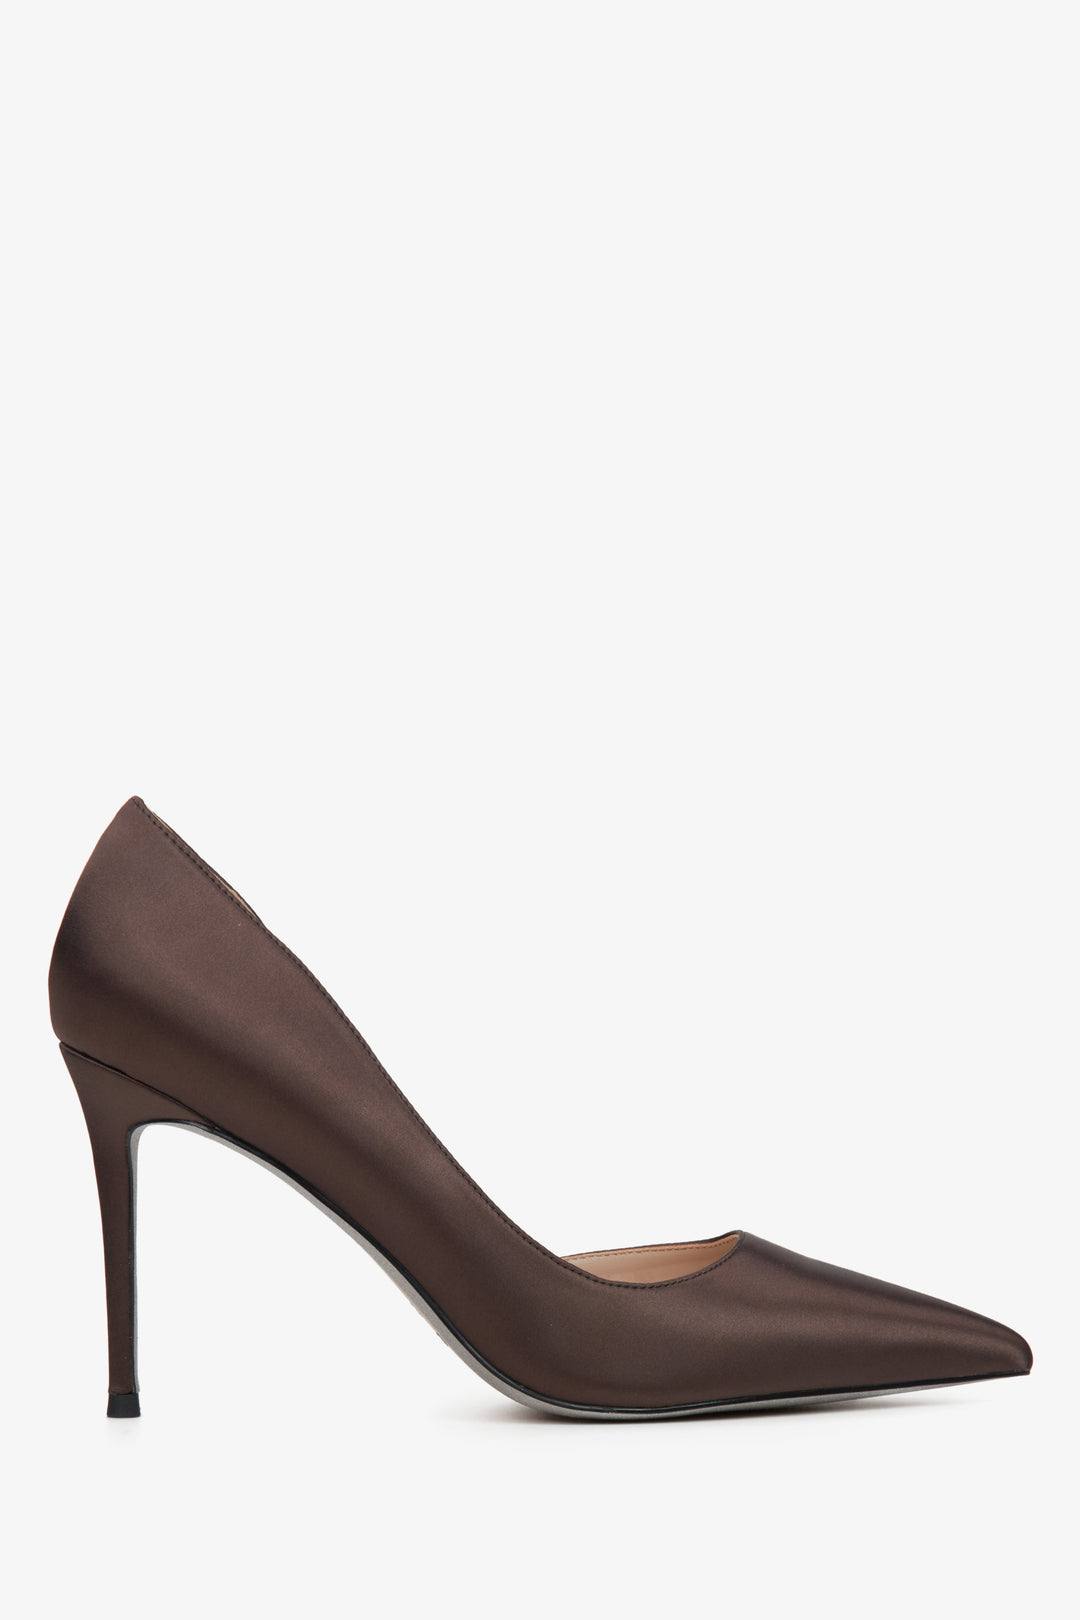 Women's Dark Brown Pointed Toe High Heels with Satin Finish Estro ER00114766.